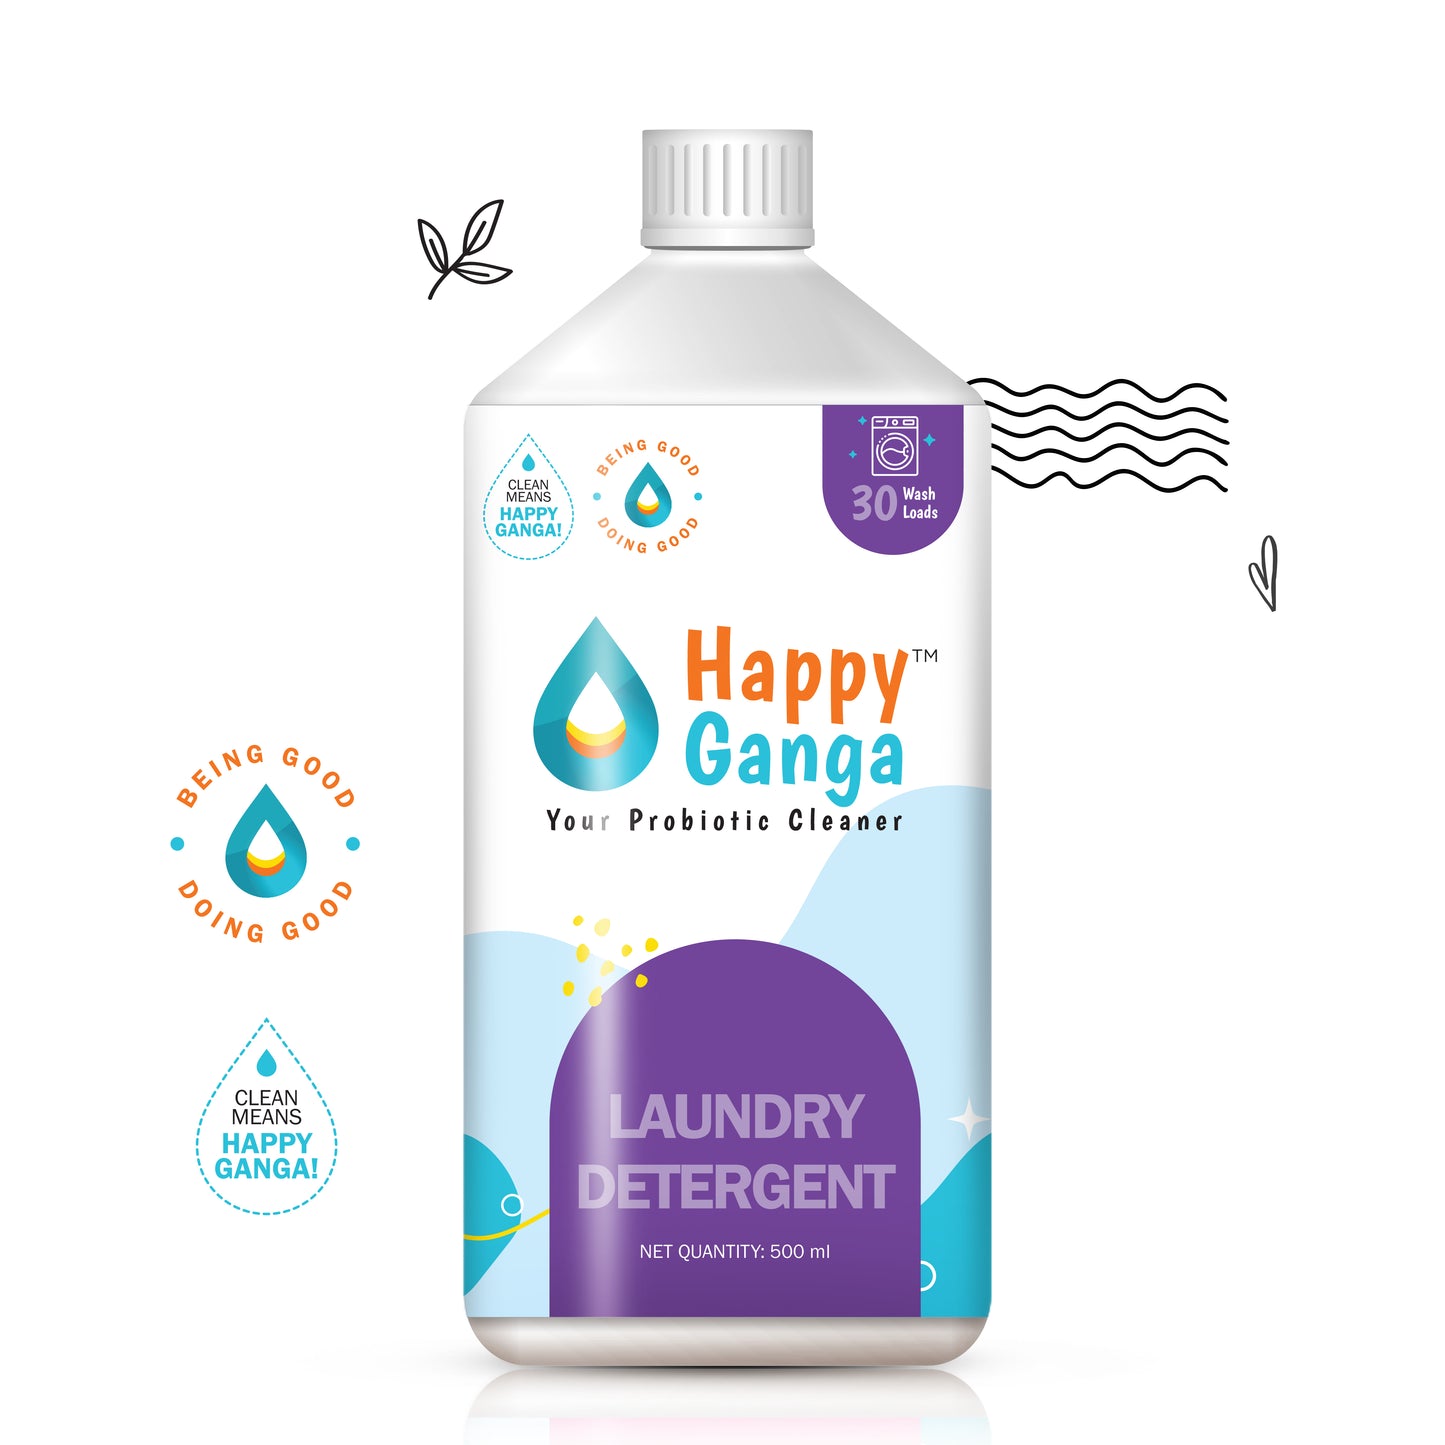 500 ML - Laundry Detergent - 30 Wash Loads